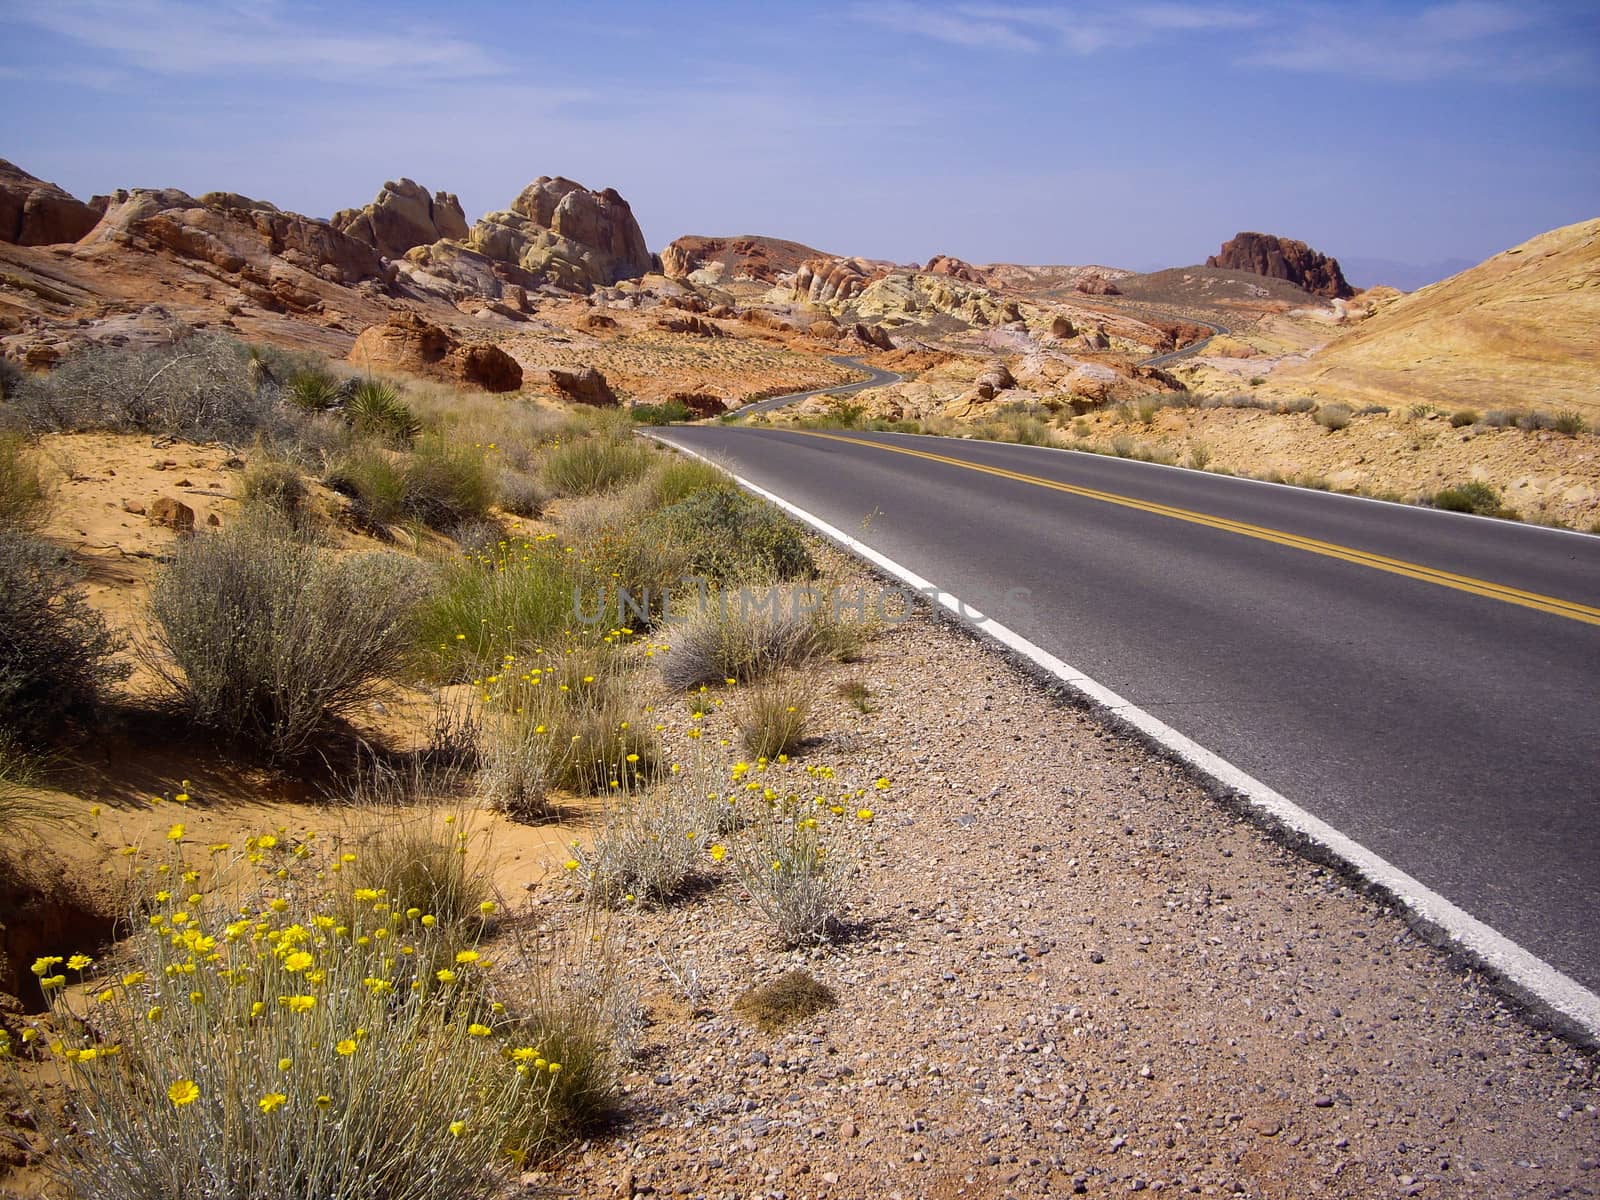 Twisting desert road by emattil